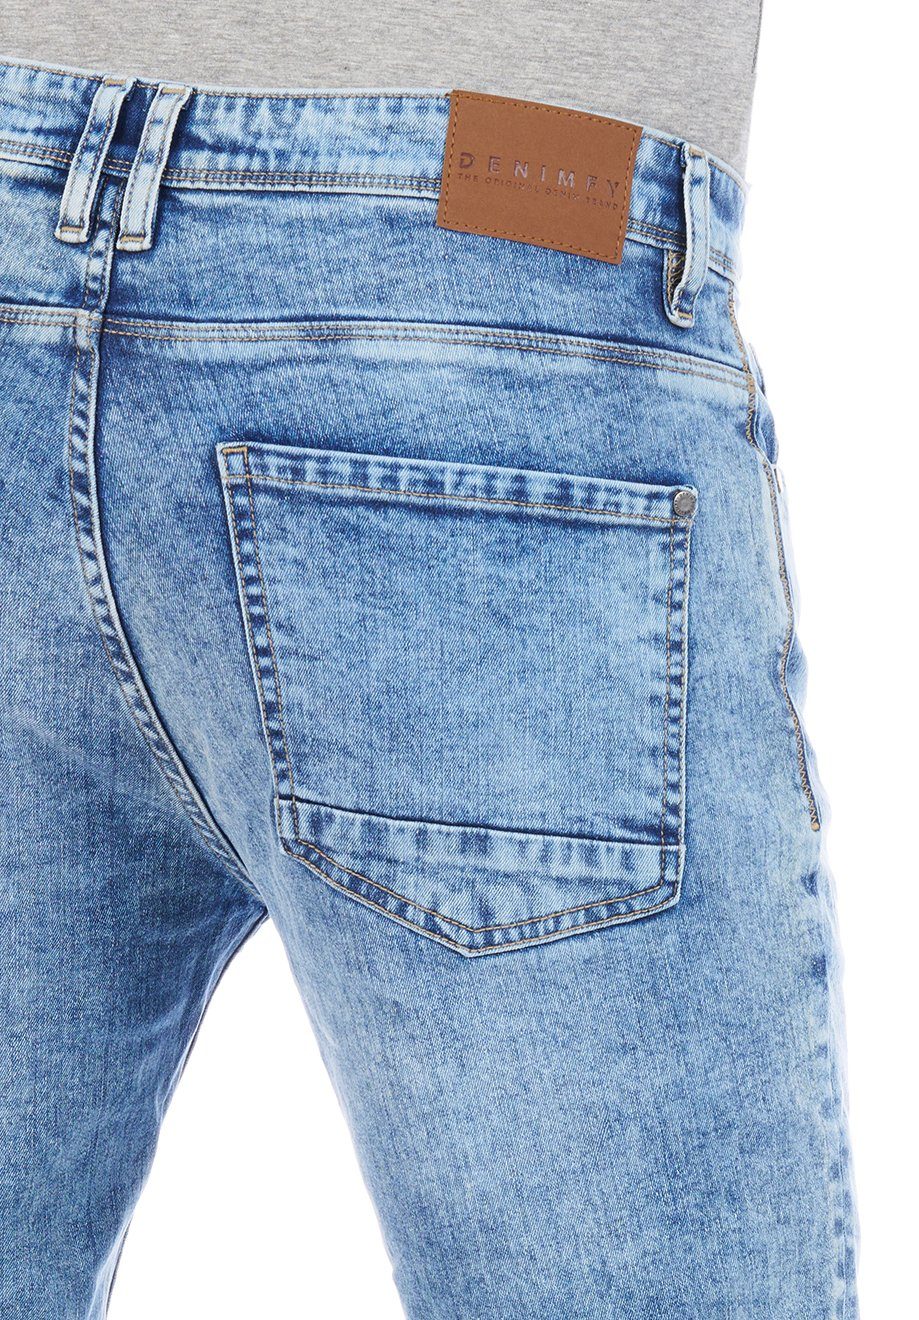 DENIMFY Straight-Jeans Herren Jeanshose Stretch Blue DFMiro Straight mit Fit Denim (L148) Jeanshose Light